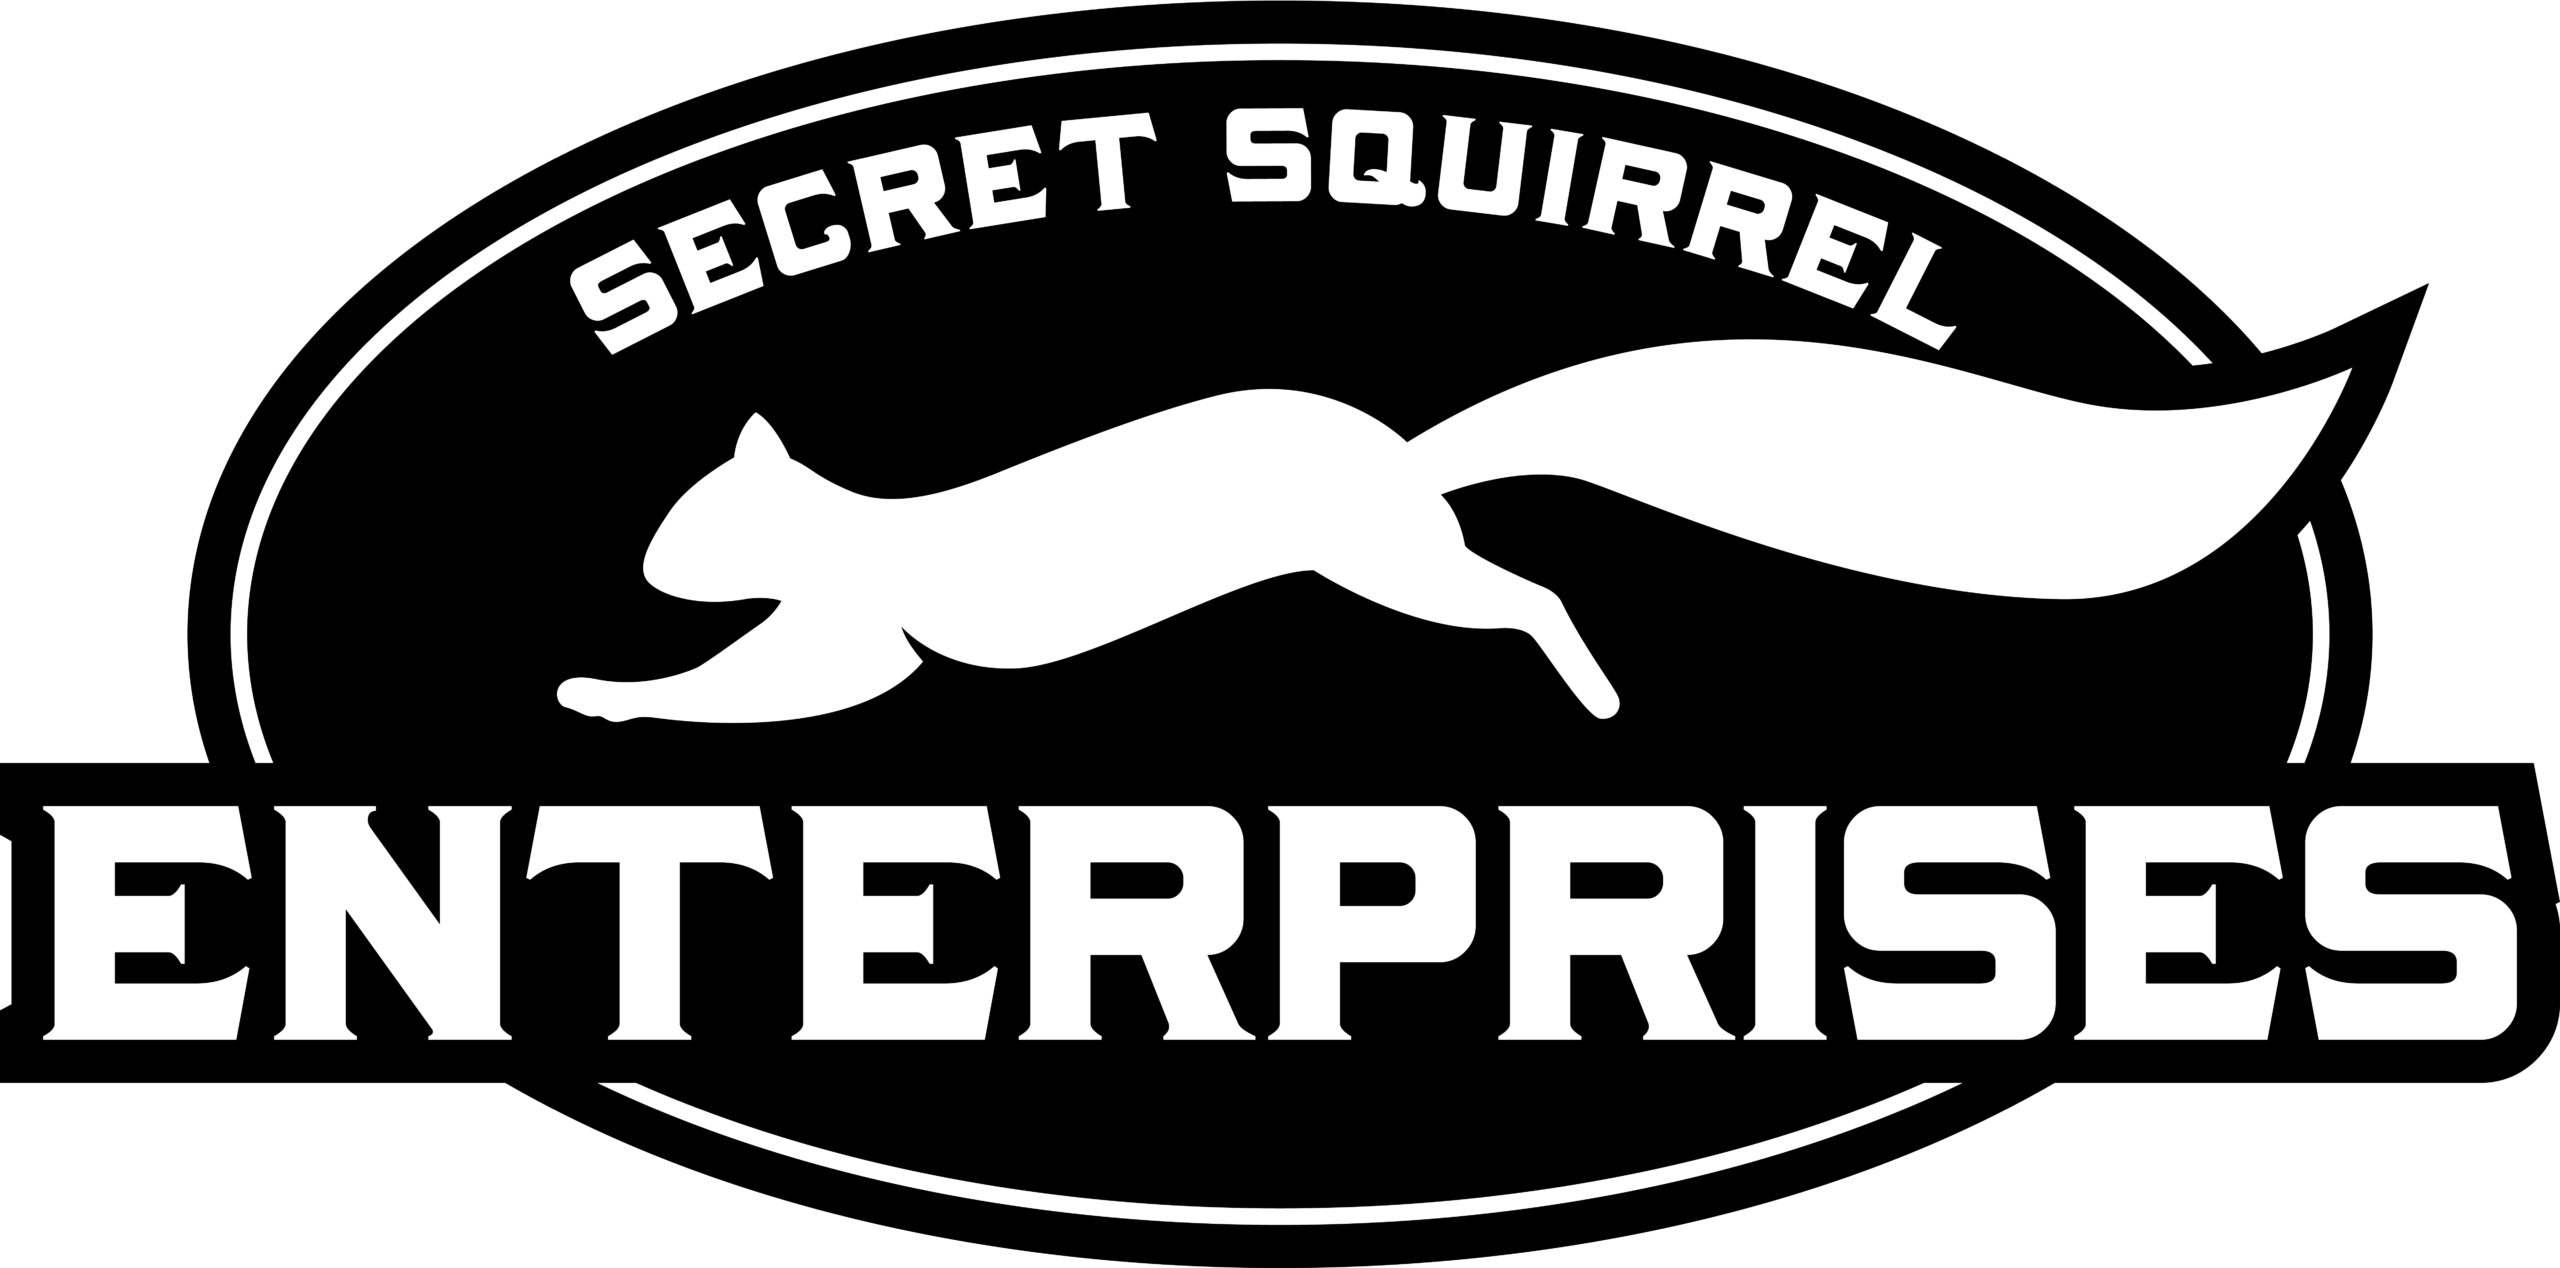 Secret Squirrel Enterprise